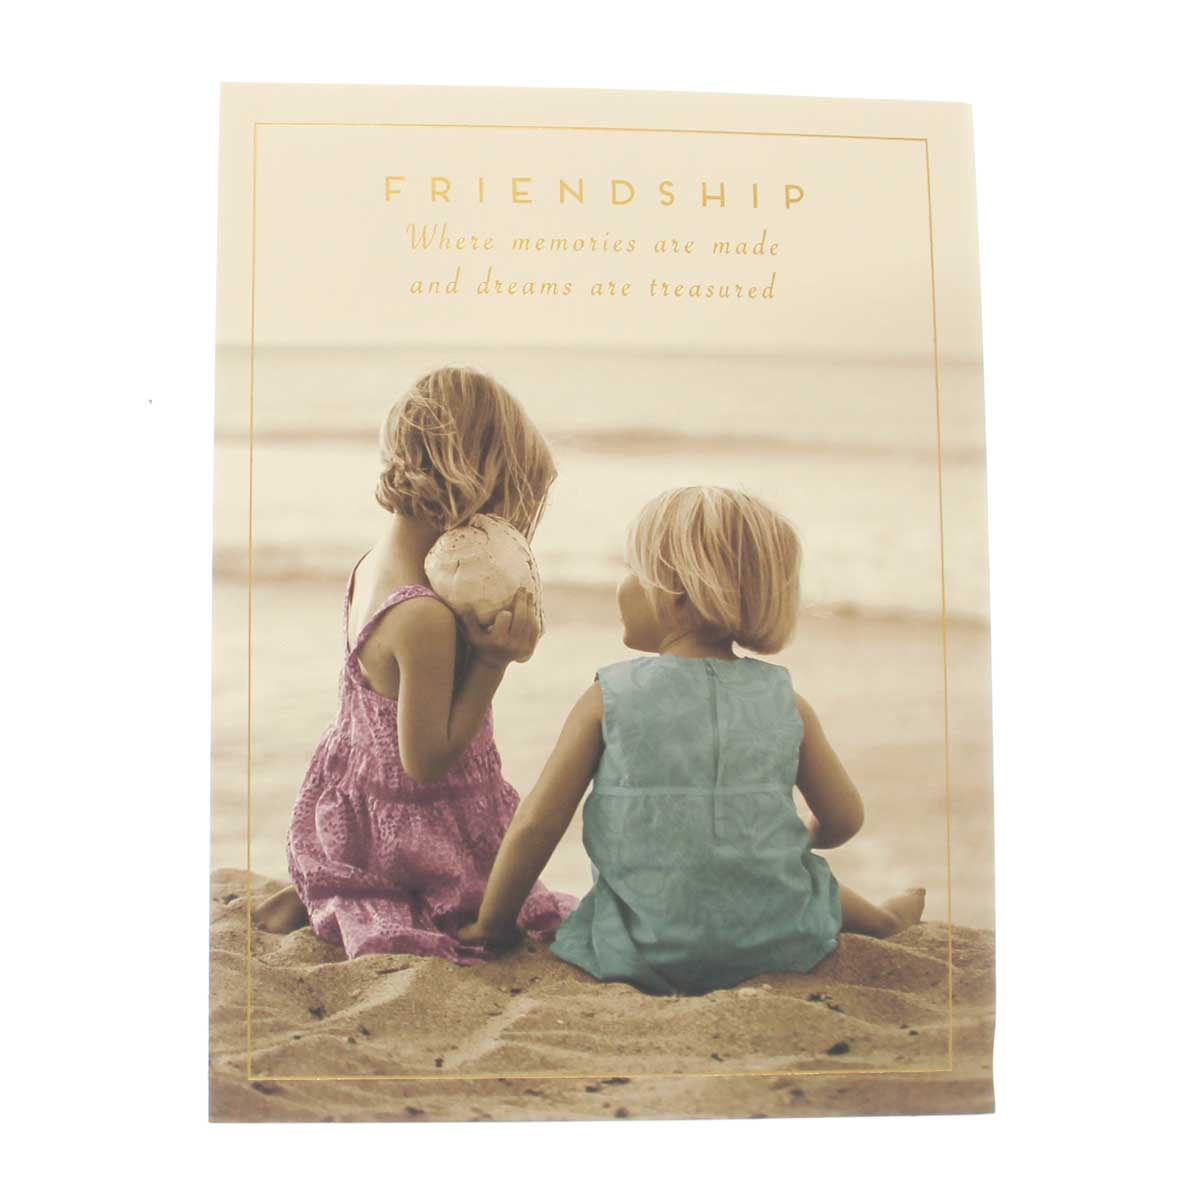 Friendship Card: Friendship, where memories are made...